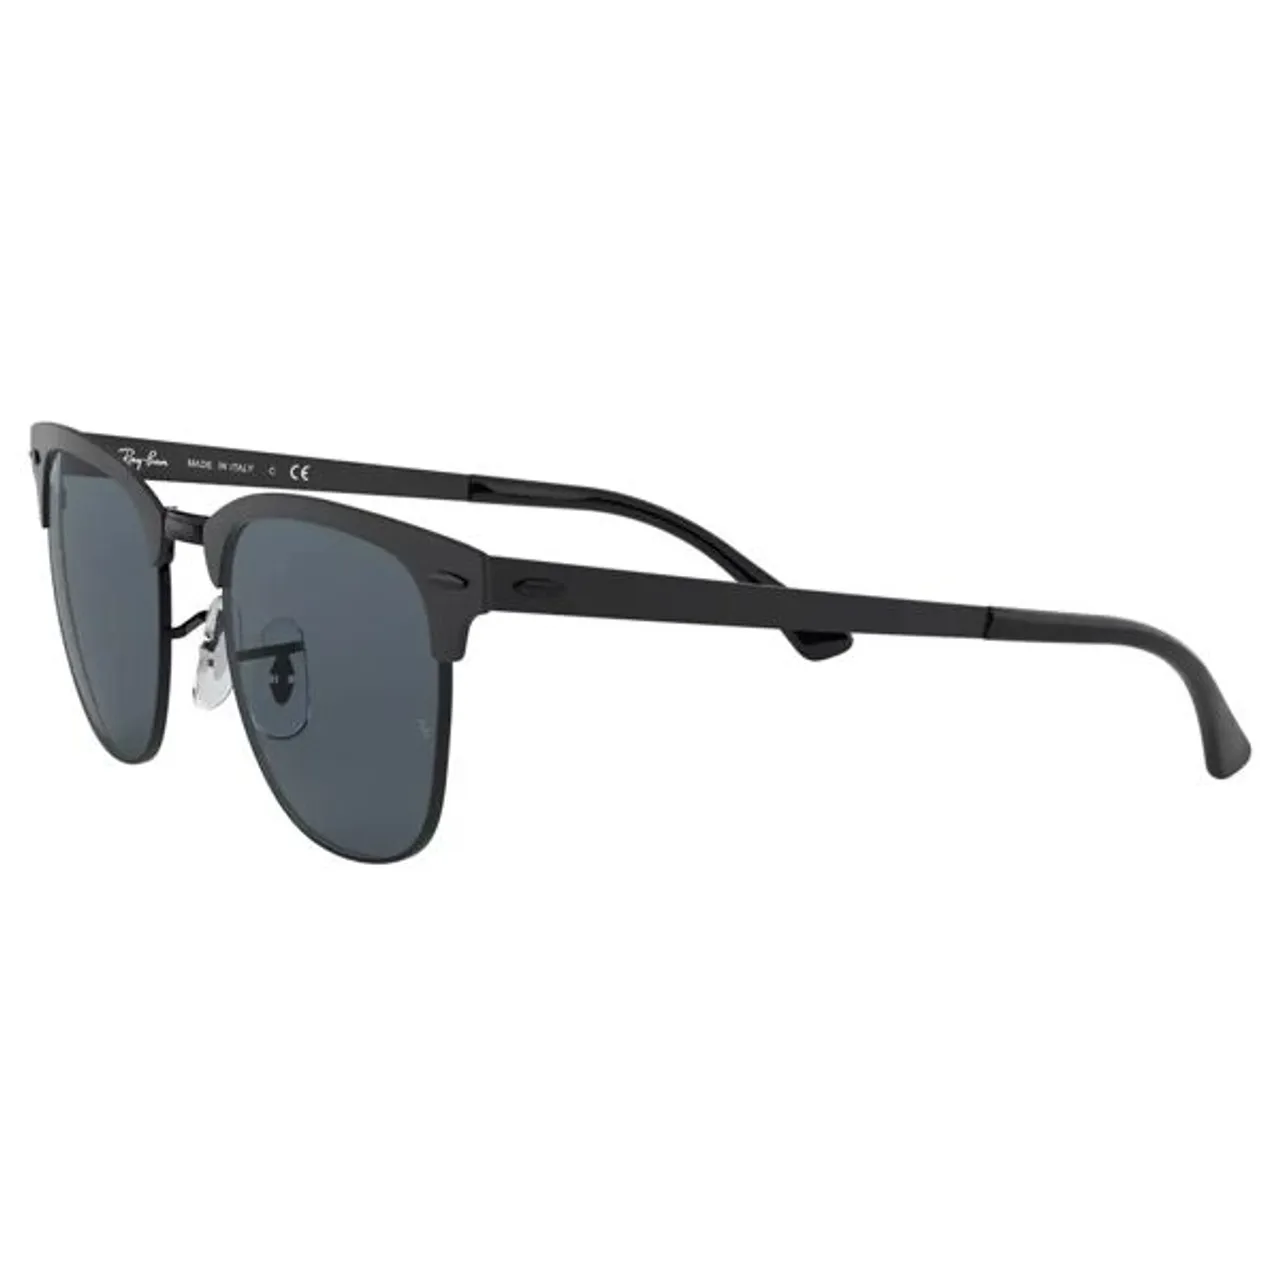 Ray-Ban RB3716 Unisex Square Sunglasses - Matte Black/Blue - Male